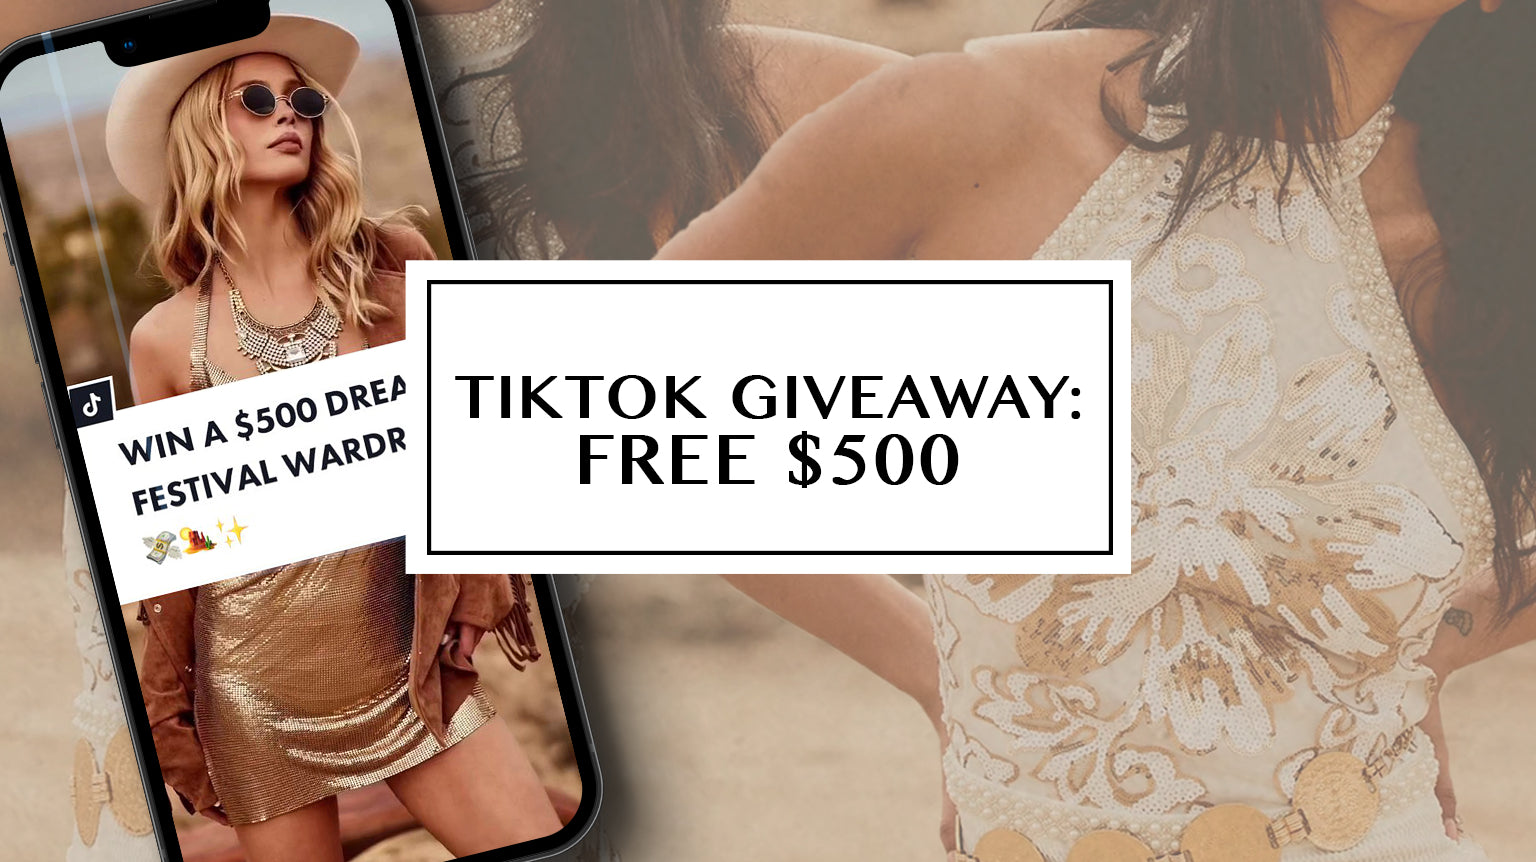 TikTok Giveaway: $500 Dream Festival Wardrobe